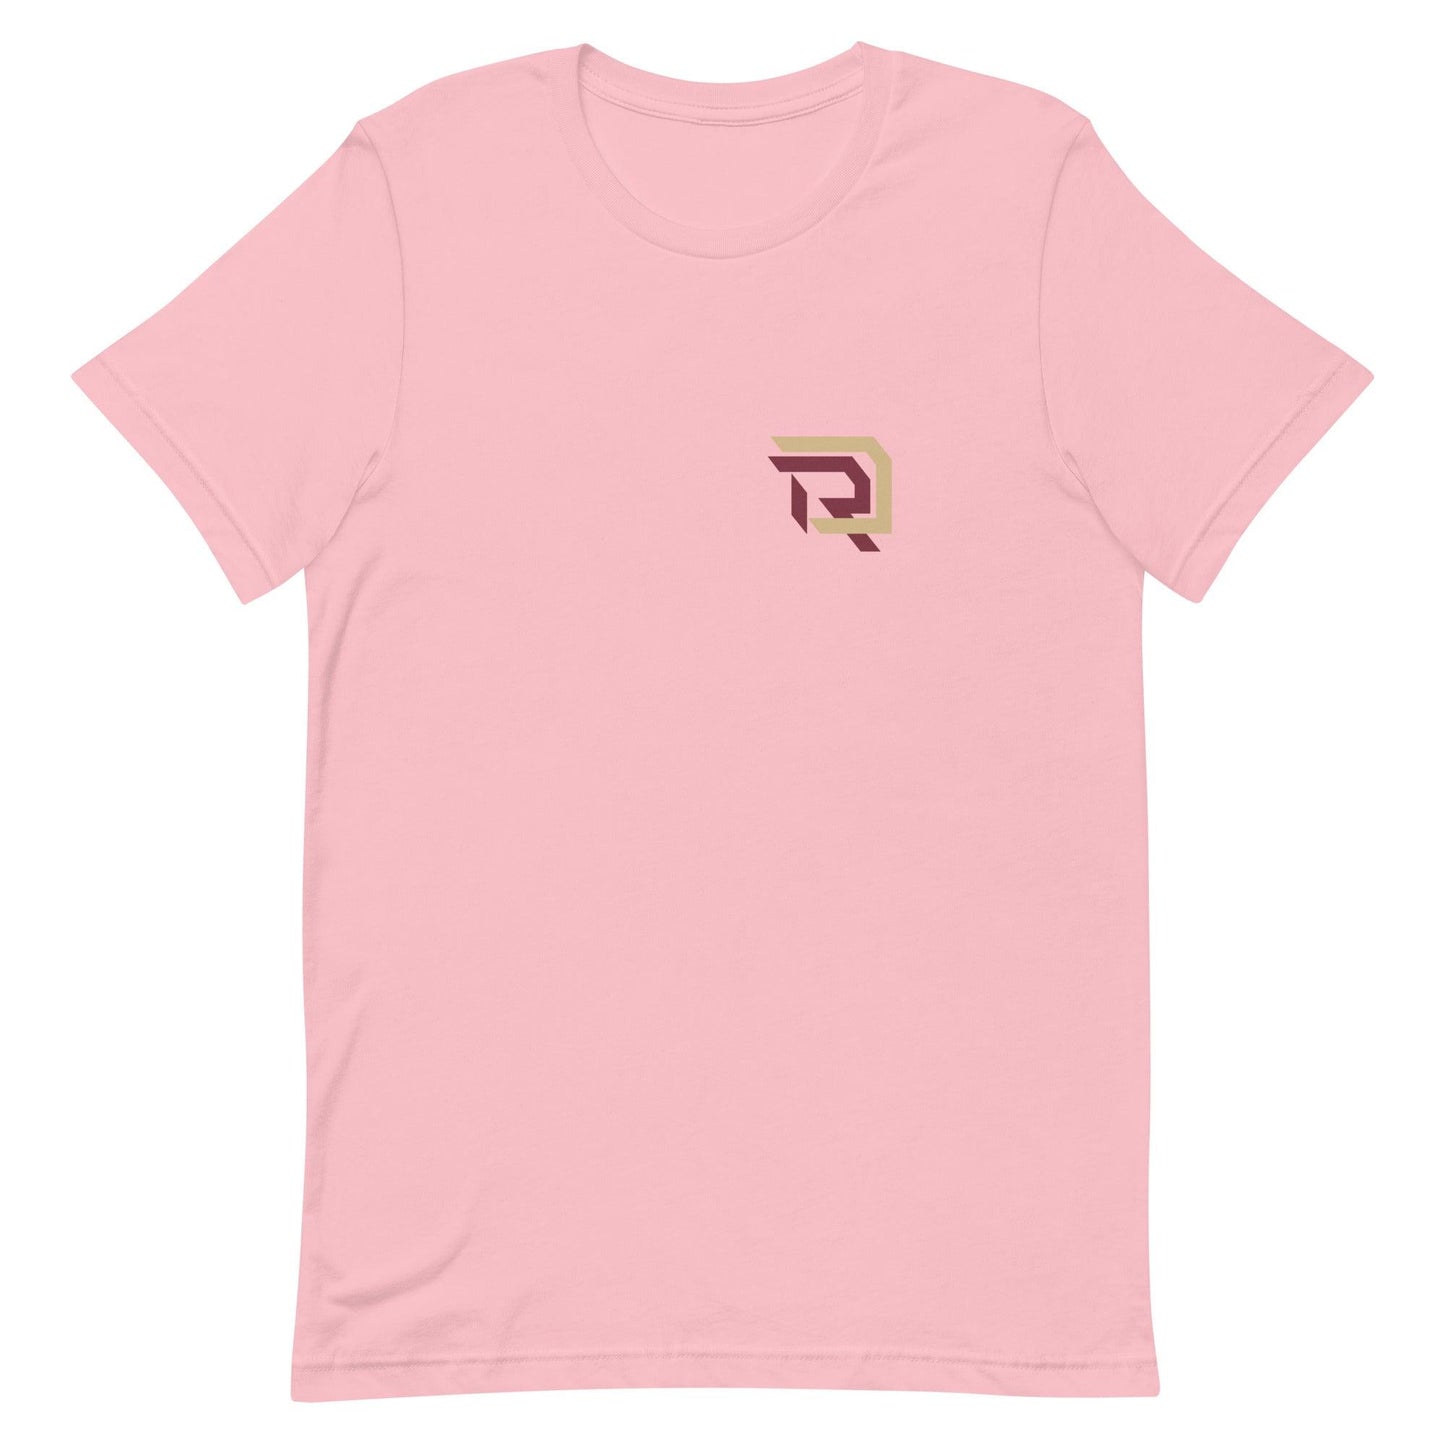 Daughtry Richardson "Elite" t-shirt - Fan Arch